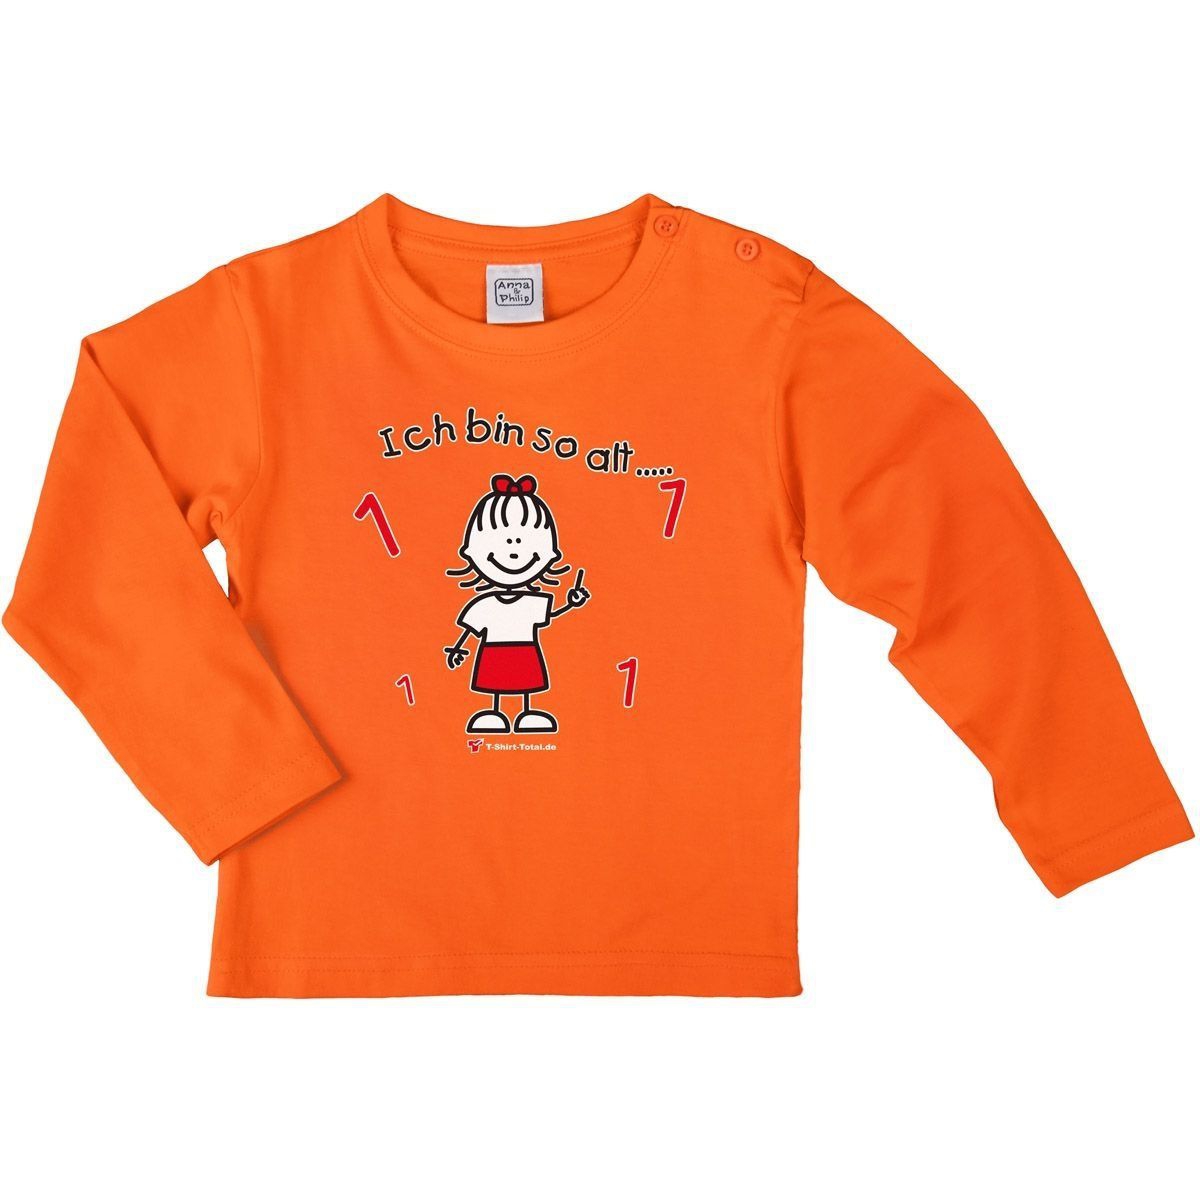 Mädchen so alt 1 Kinder Langarm Shirt orange 92